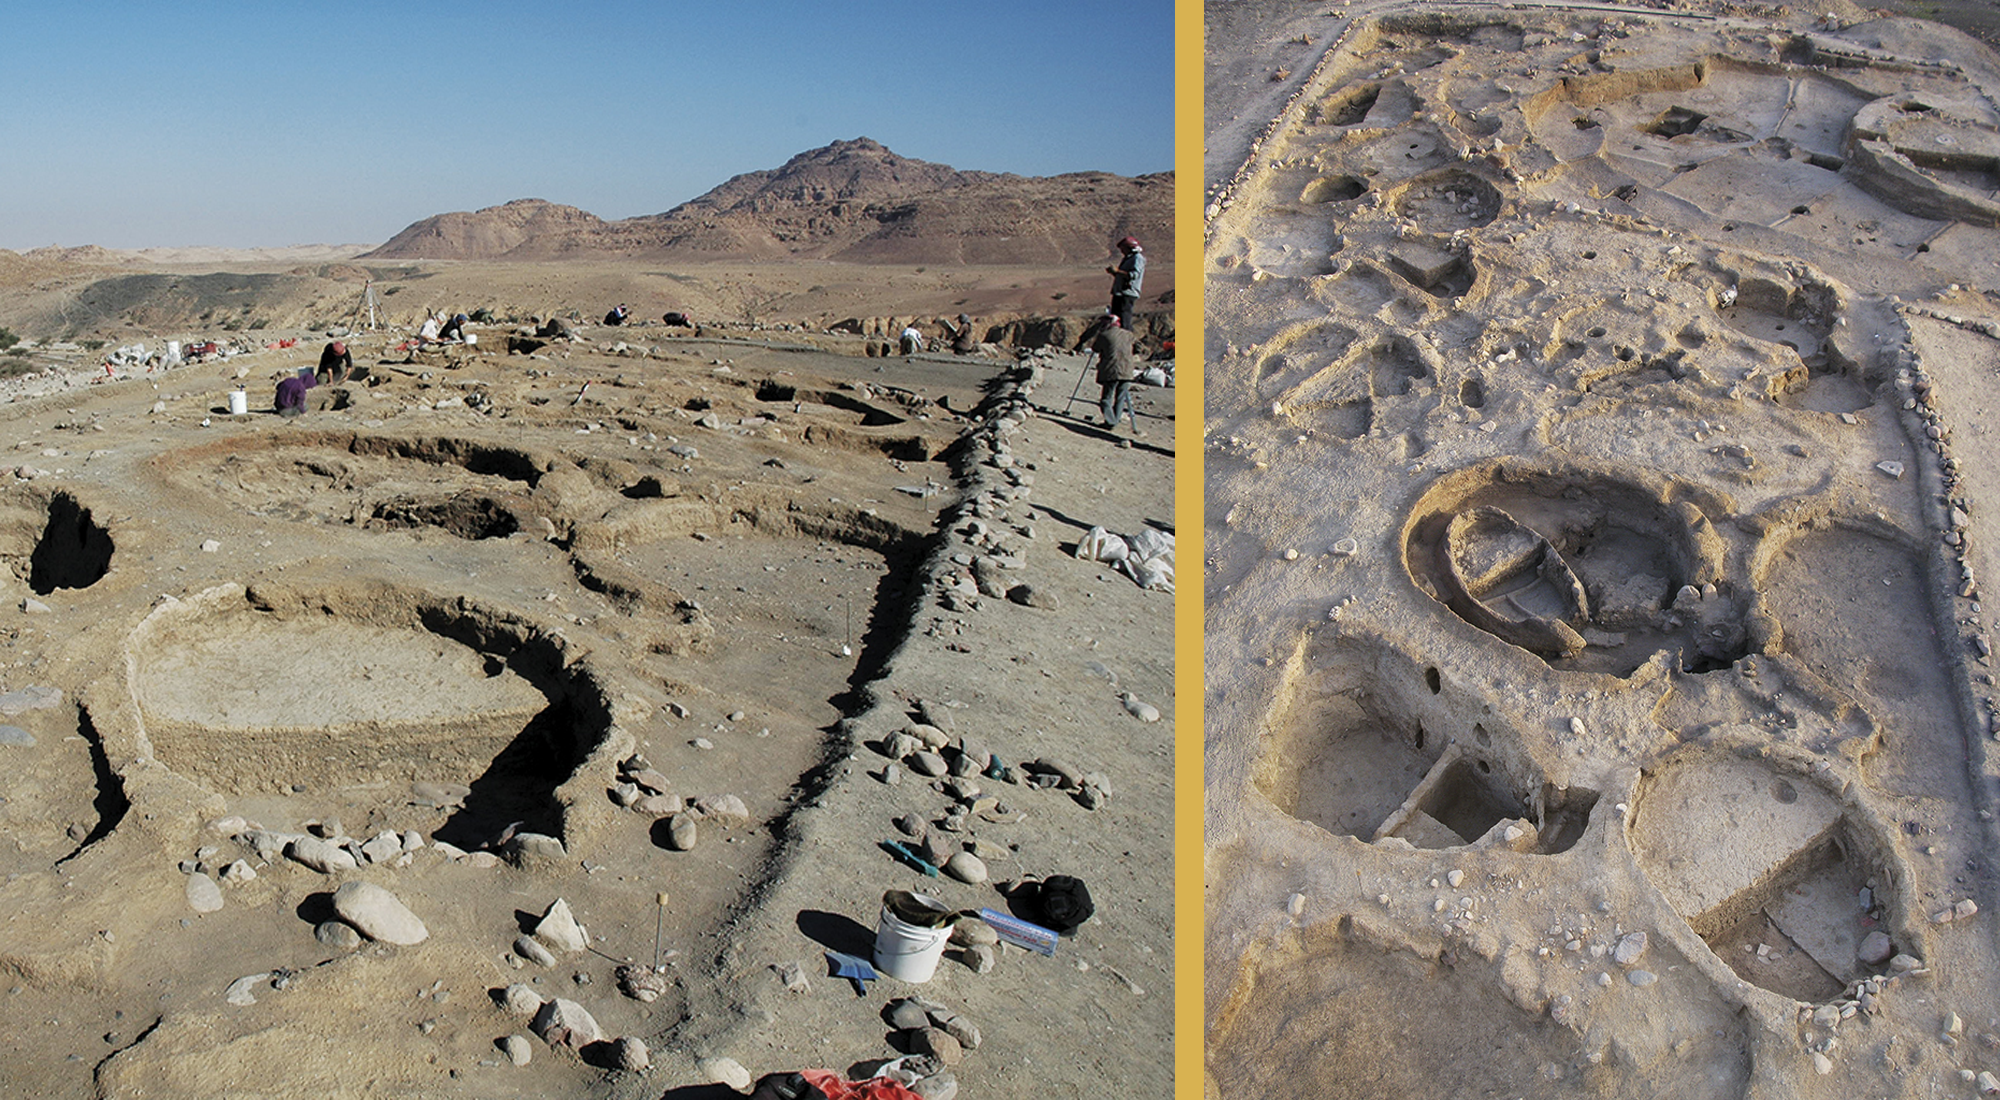 Photographs of the ancient site of Wadi Faynan 16.Image Credit: Faynan Heritage.